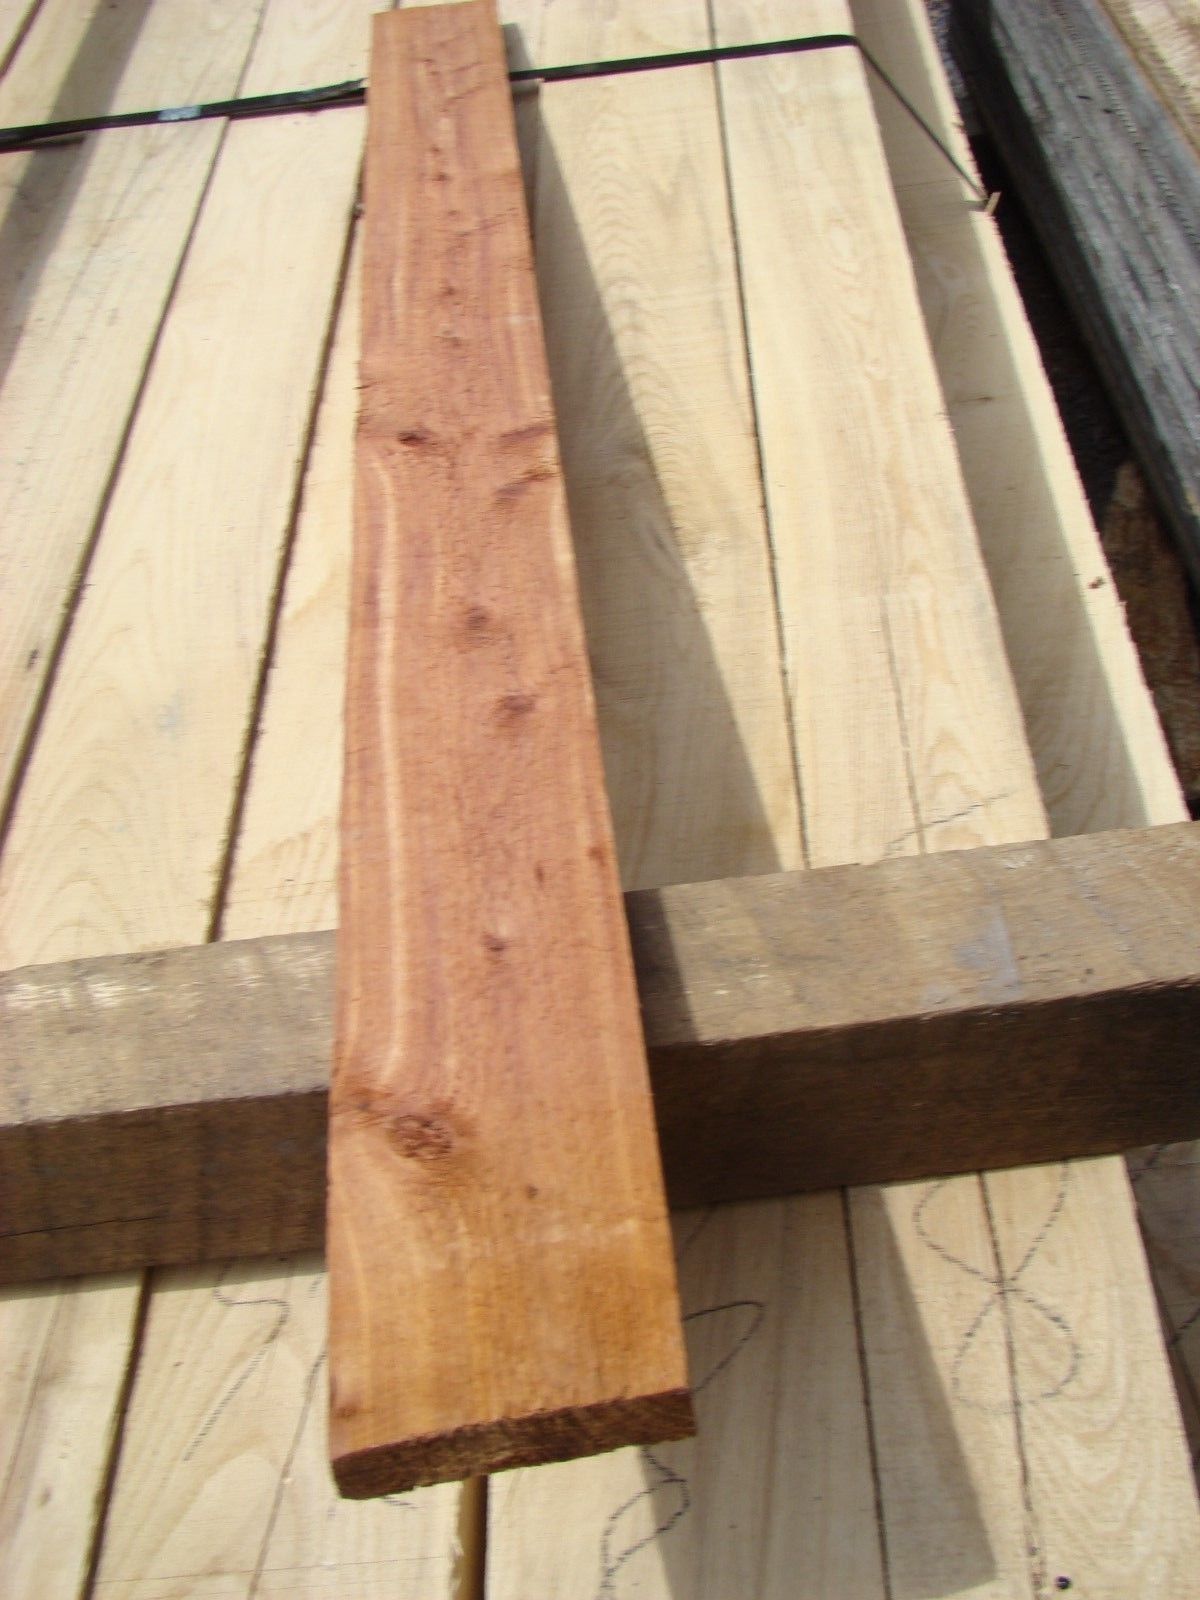 Aromatic Eastern Red Cedar Rough Cut 1x4 Boards 48 Long Lumber